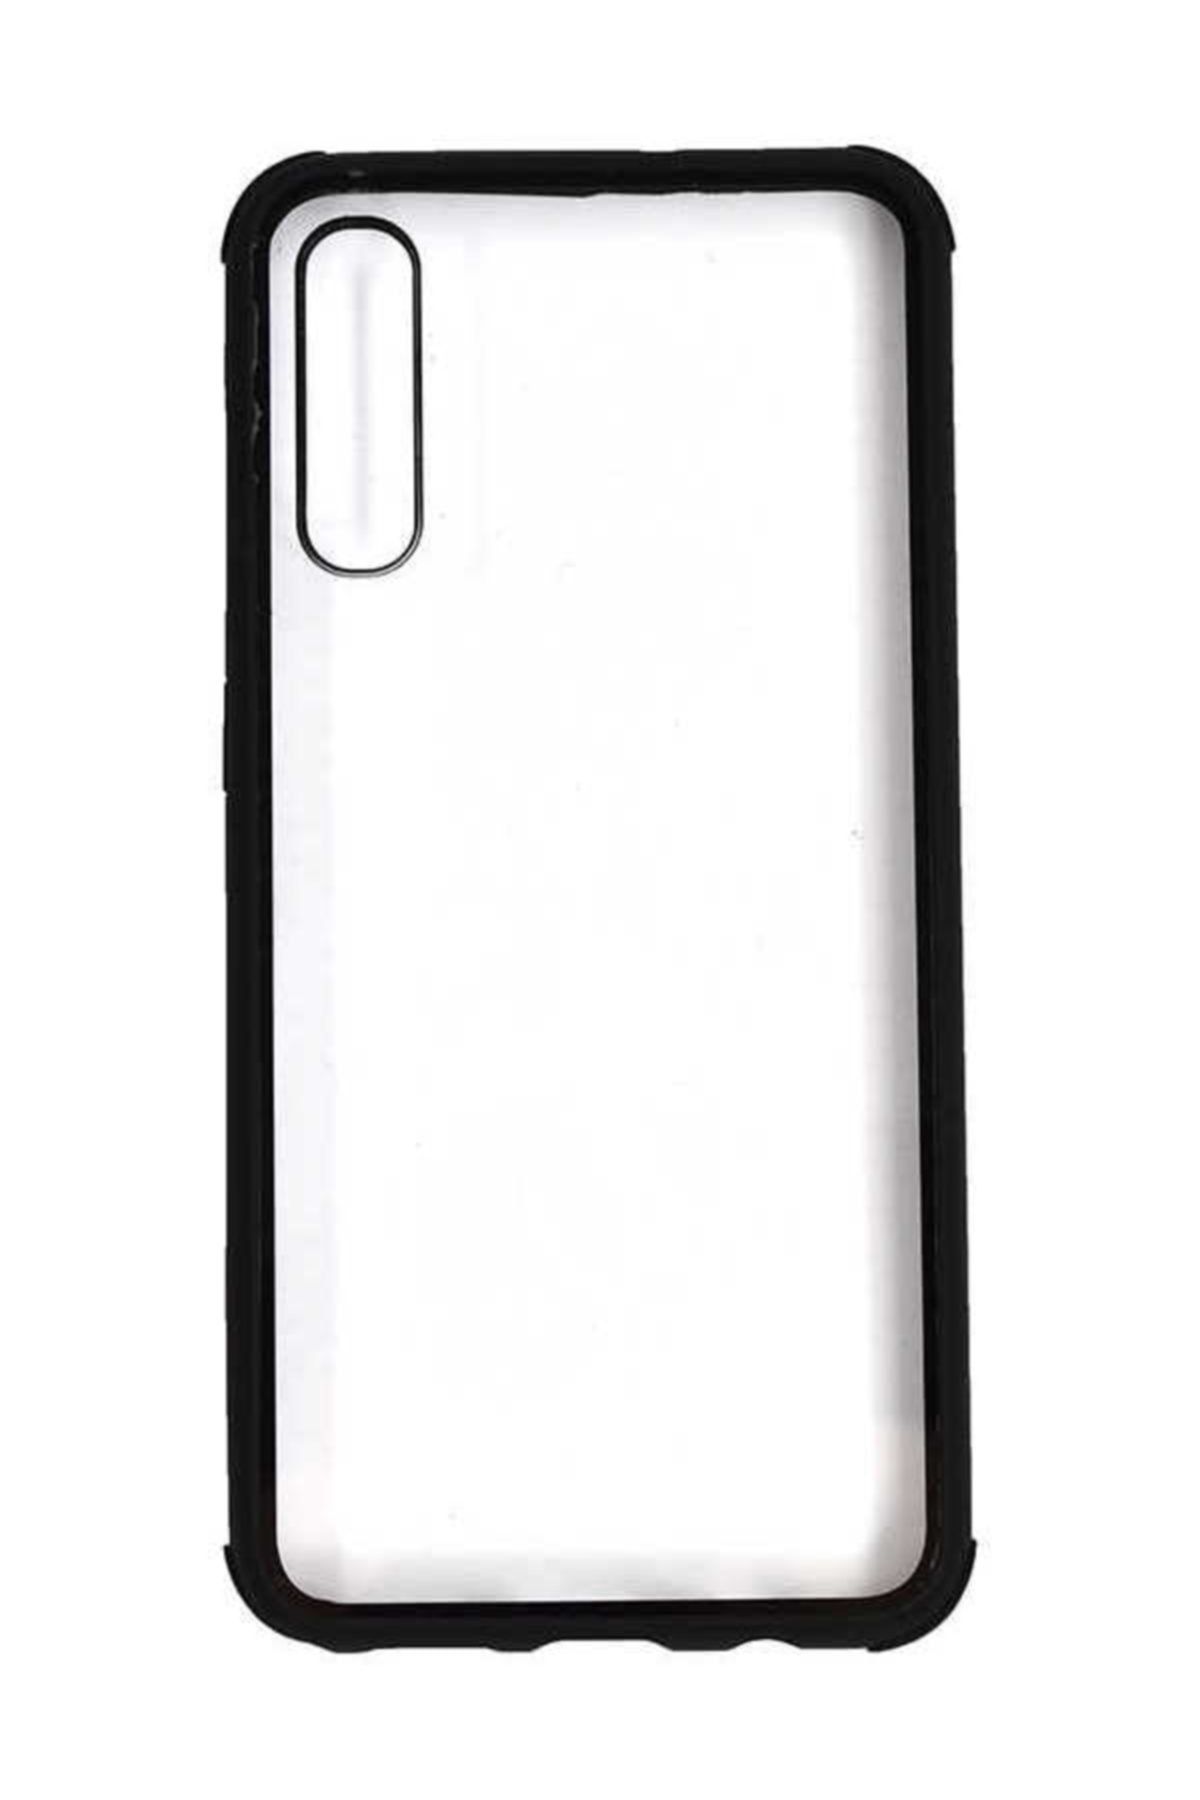 Anka Cep Cep Telefonu Aksesuarları Galaxy A50 Kılıf Tiron Silikon Kapak